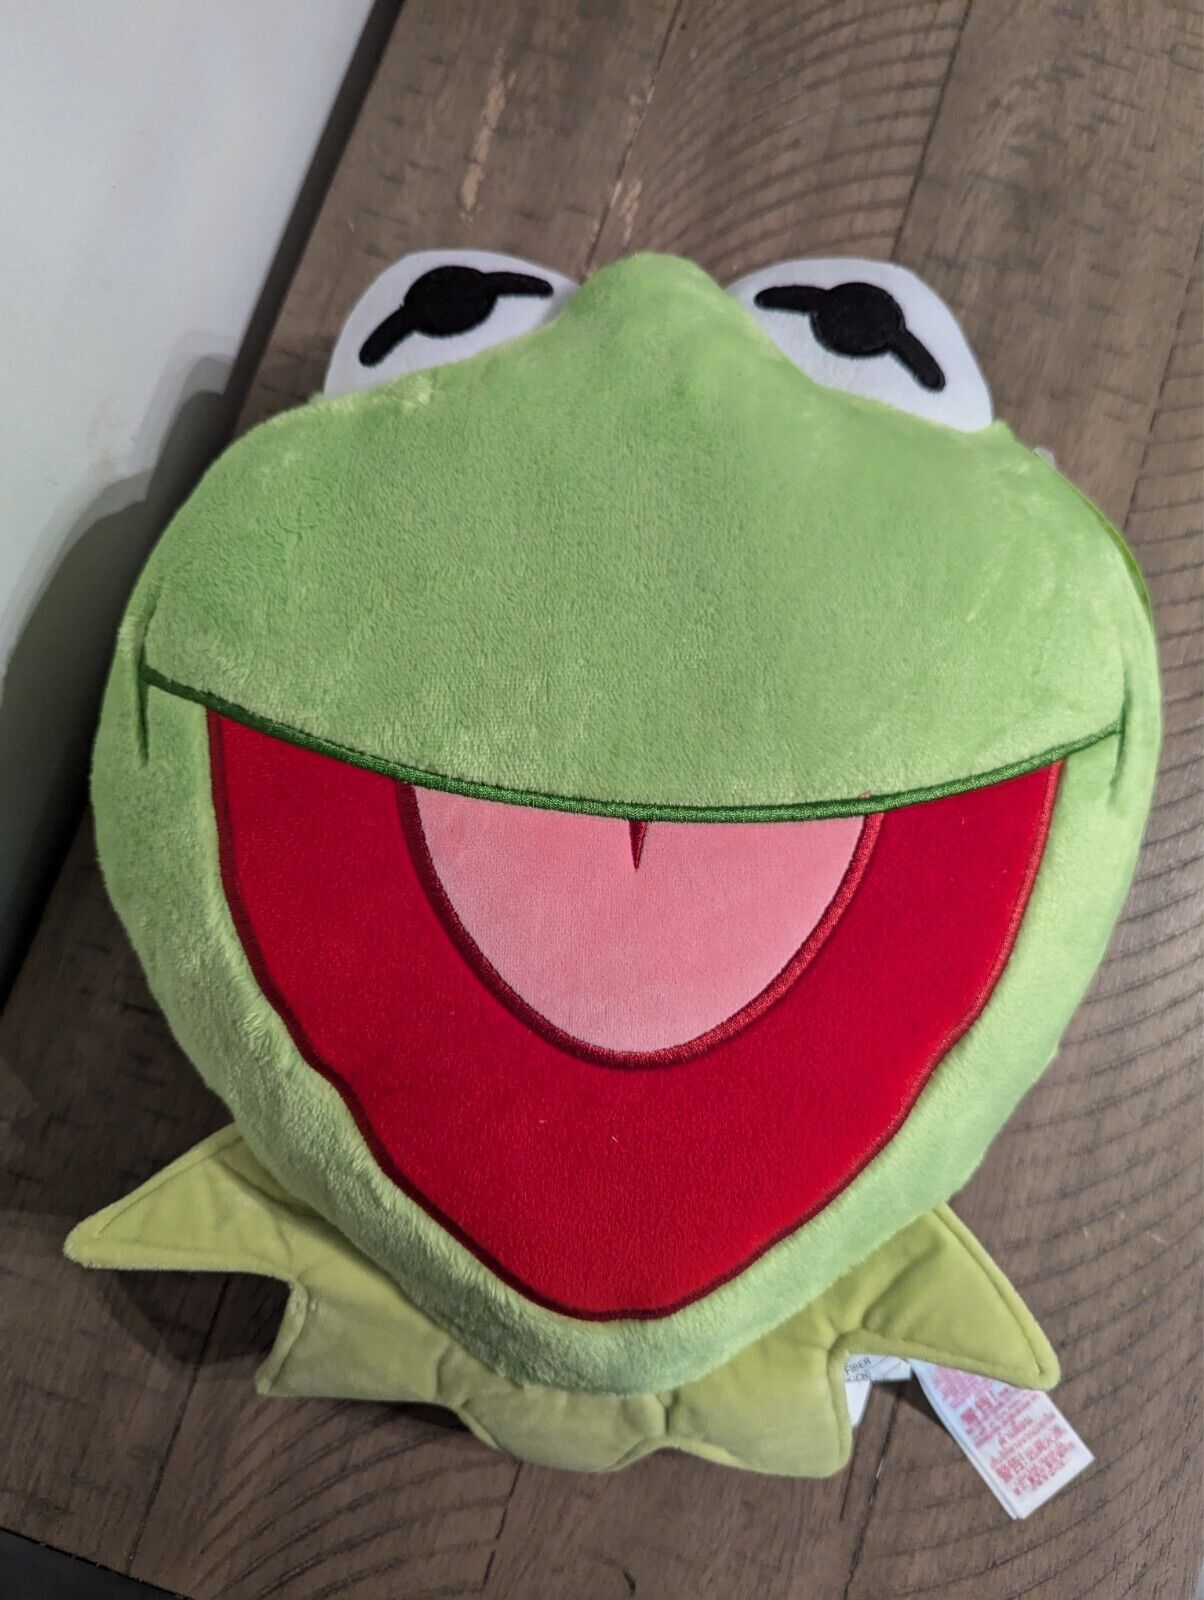 NEW Walt Disney World Parks Muppets Kermit The Frog Throw Pillow Soft 17x17x2.5